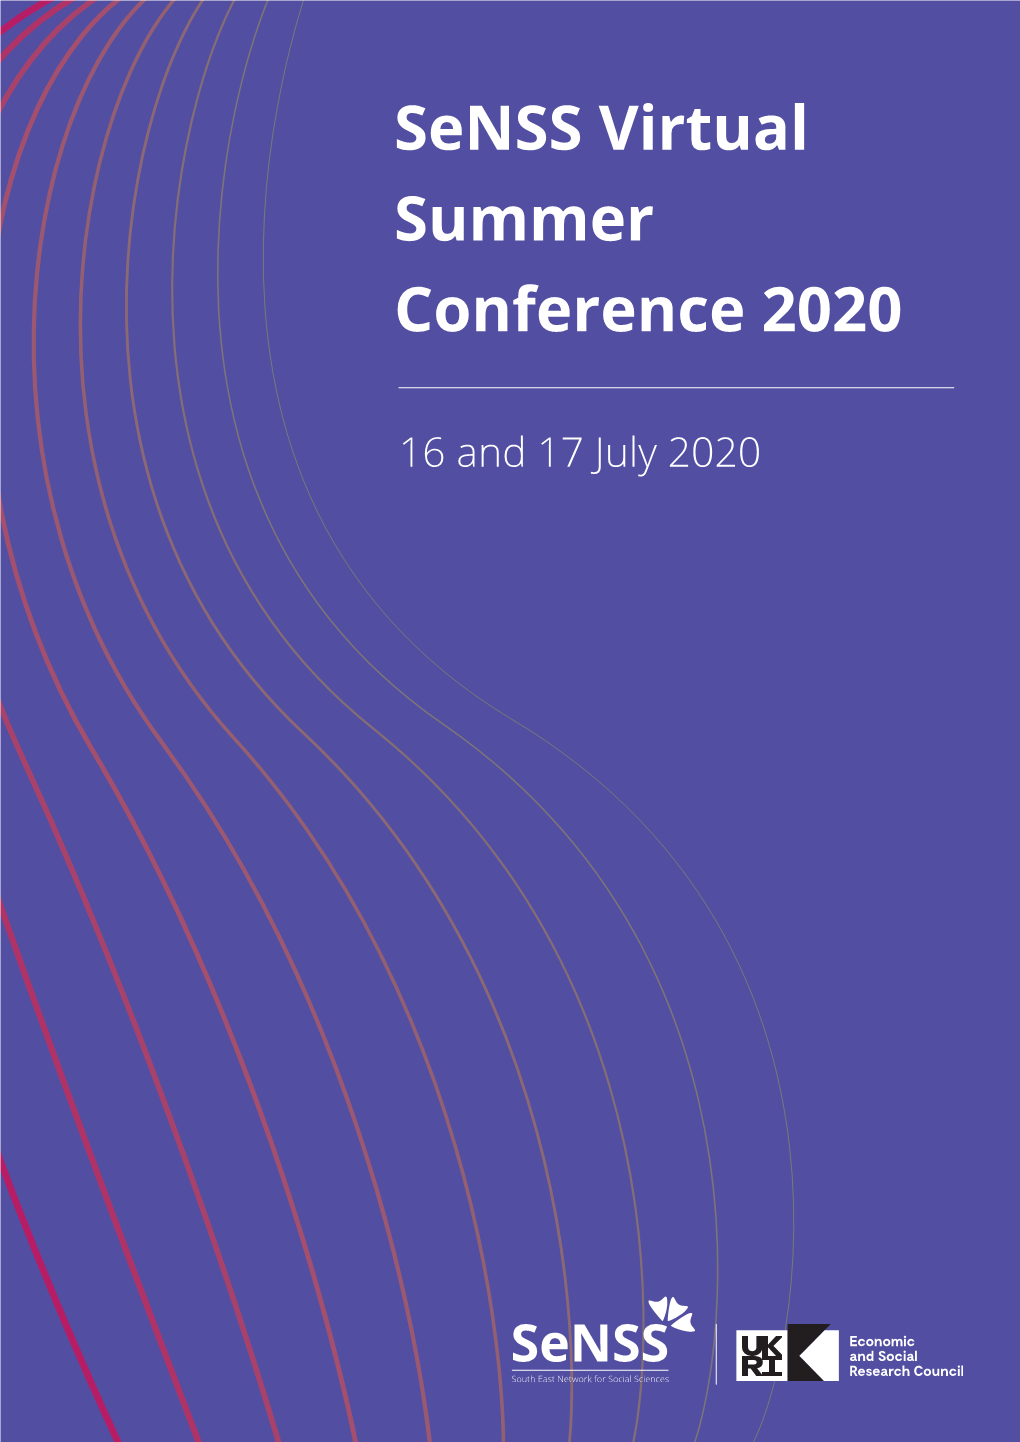 Senss Virtual Summer Conference 2020